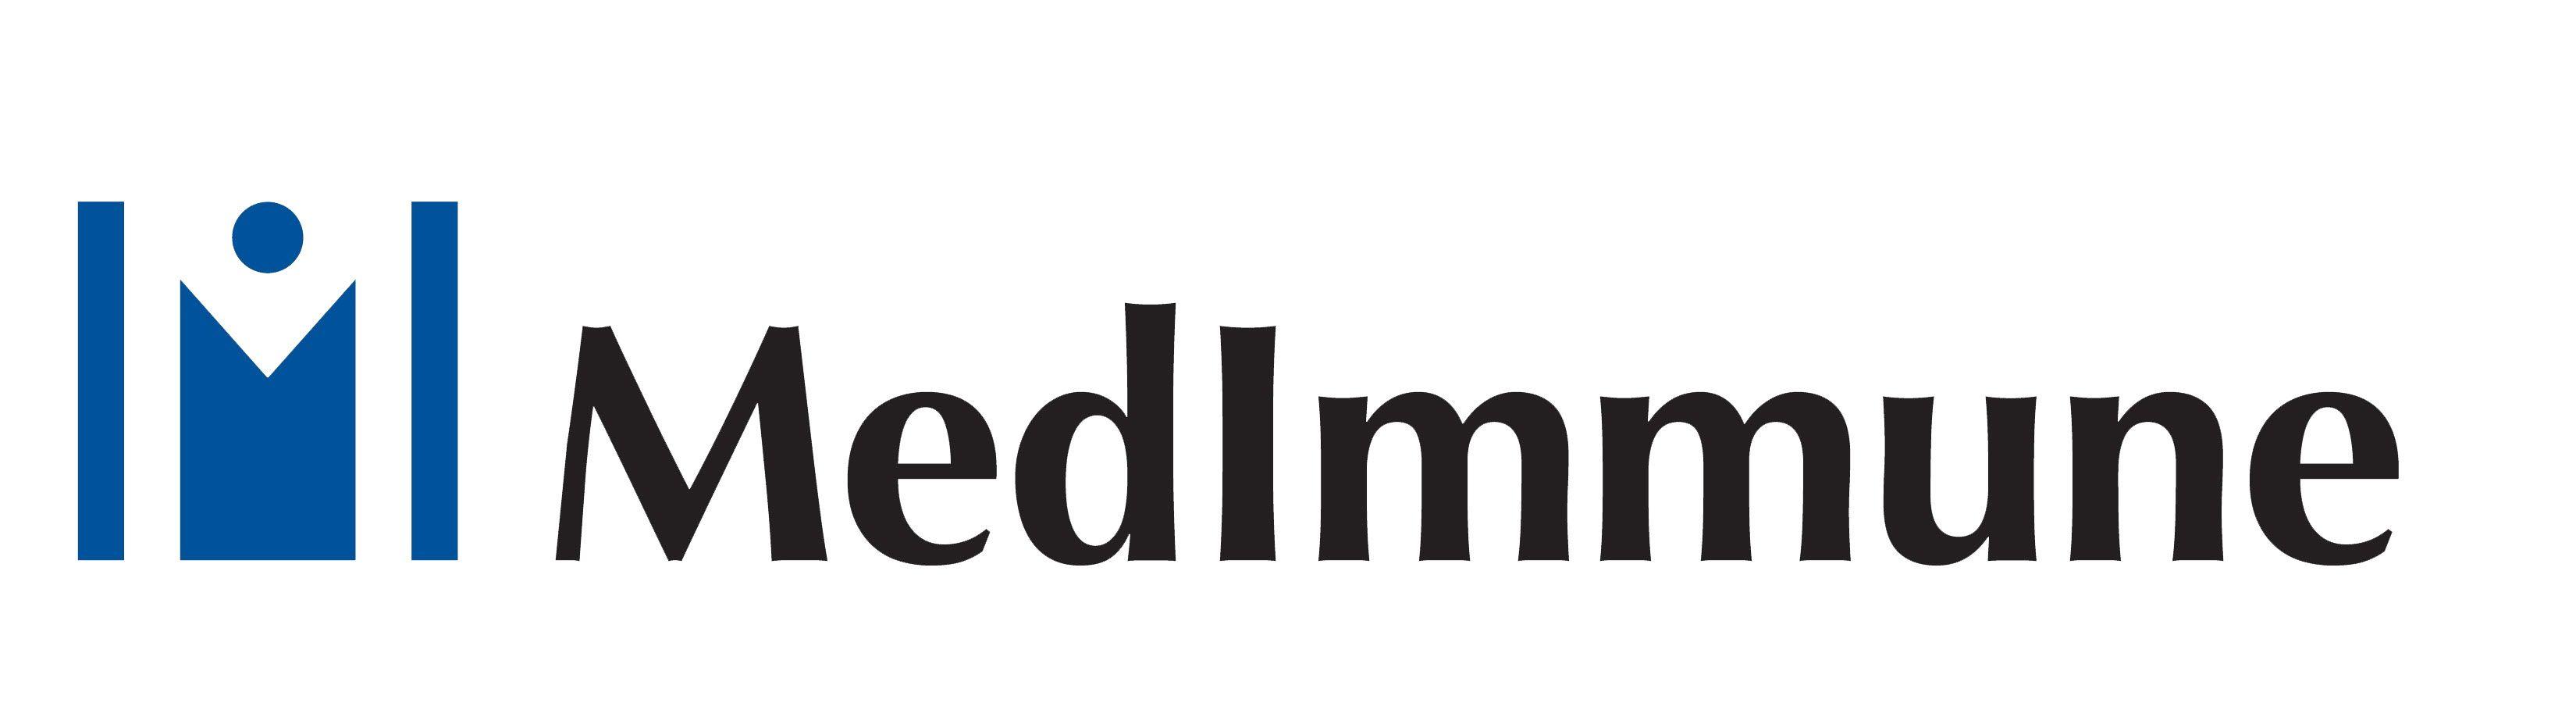 MedImmune Logo - Medimmune Logo Capital Region